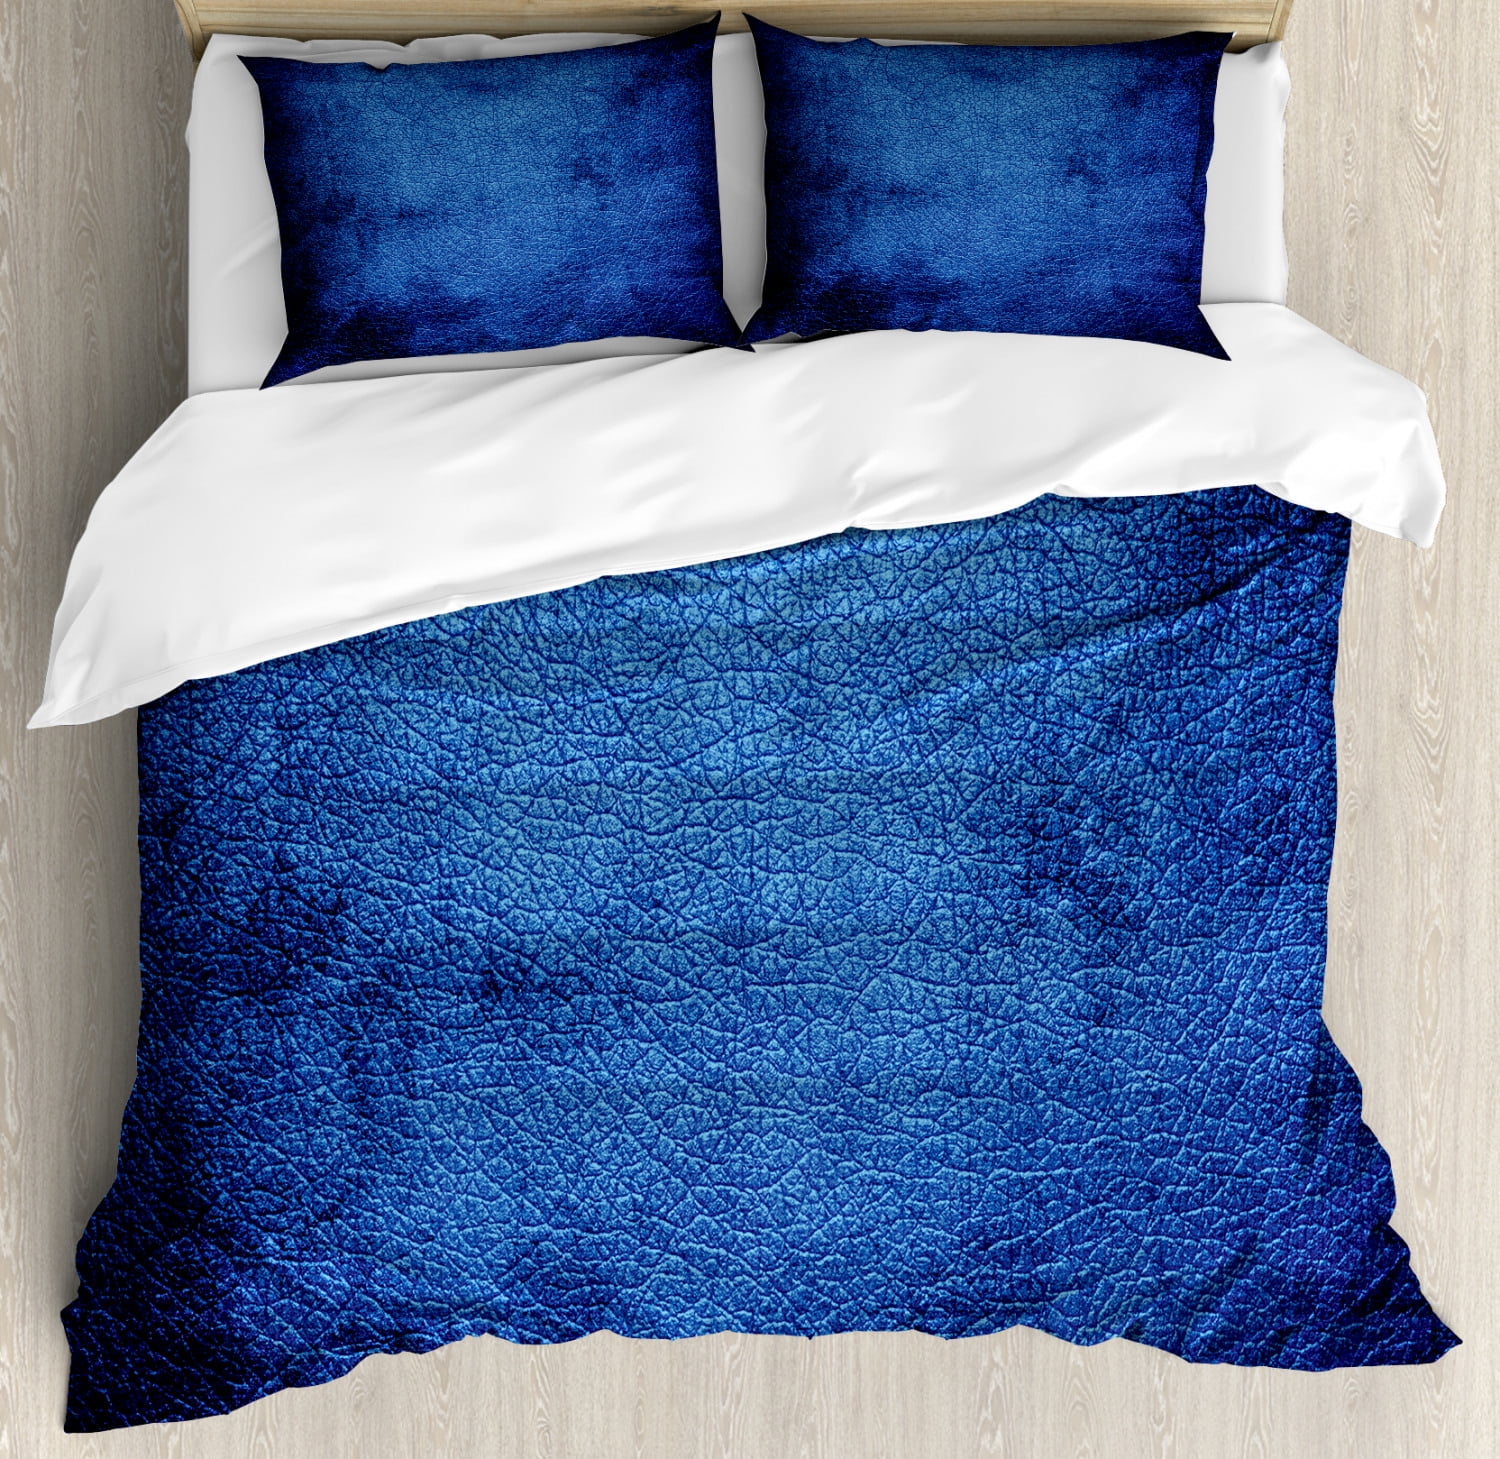 Modern Tree Duvet Set Contemporary Blue Bedroom Bedding Bed Cover Shams 3pc NEW